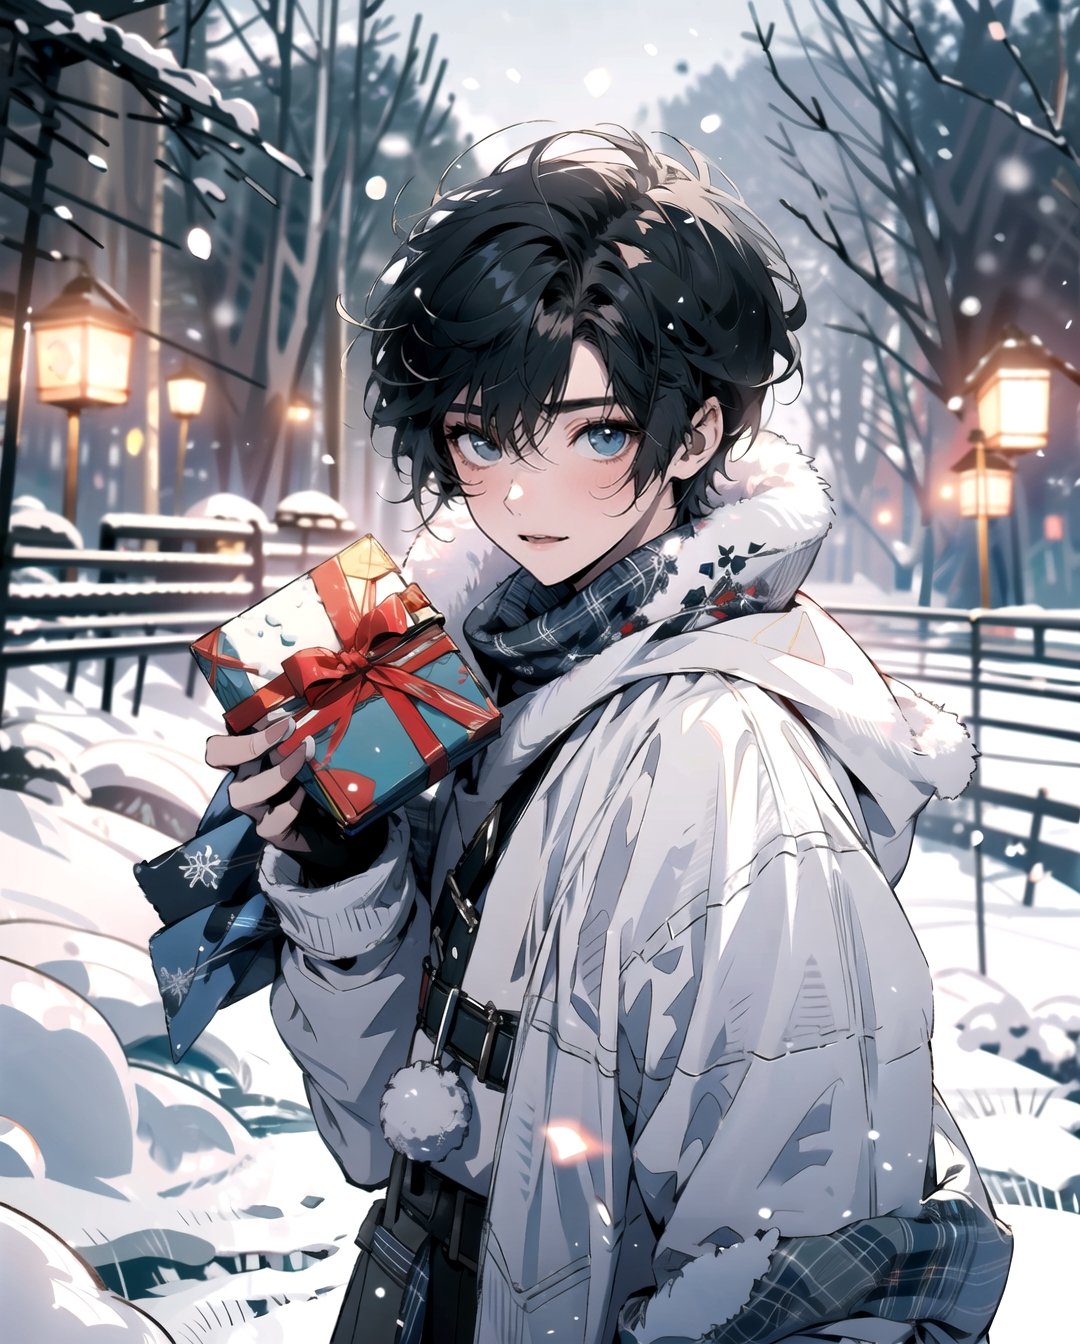 masterpiece,girl, christmas, holding presents, happy, snow, winter,1guy,midjourney